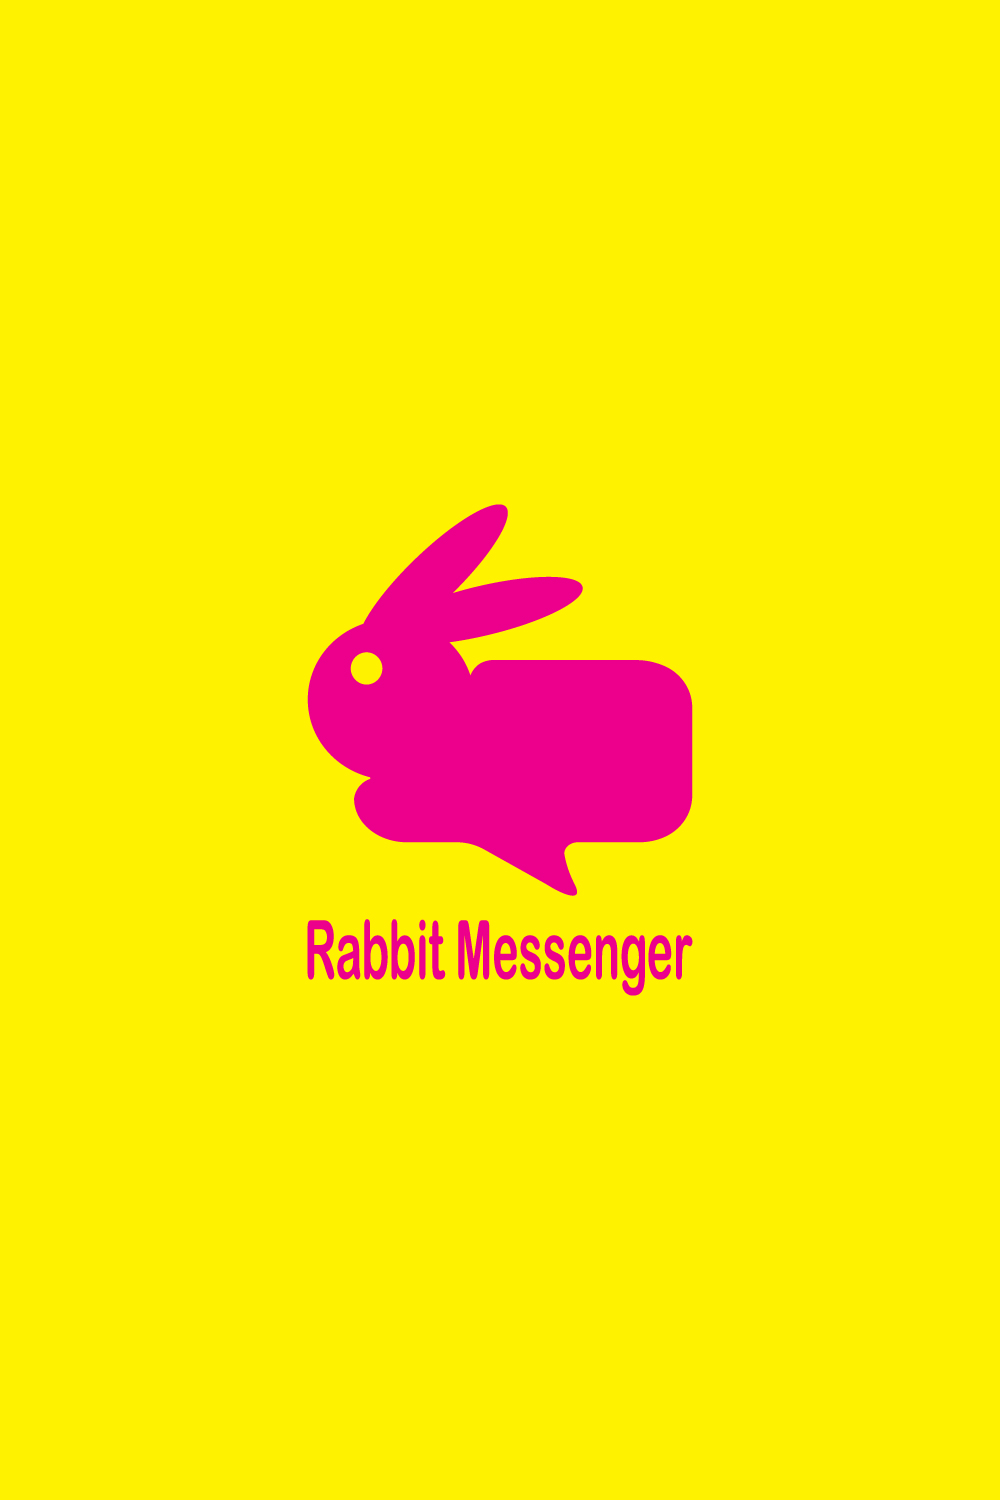 Simple Rabbit Messenger & Chat Logo Design cover.